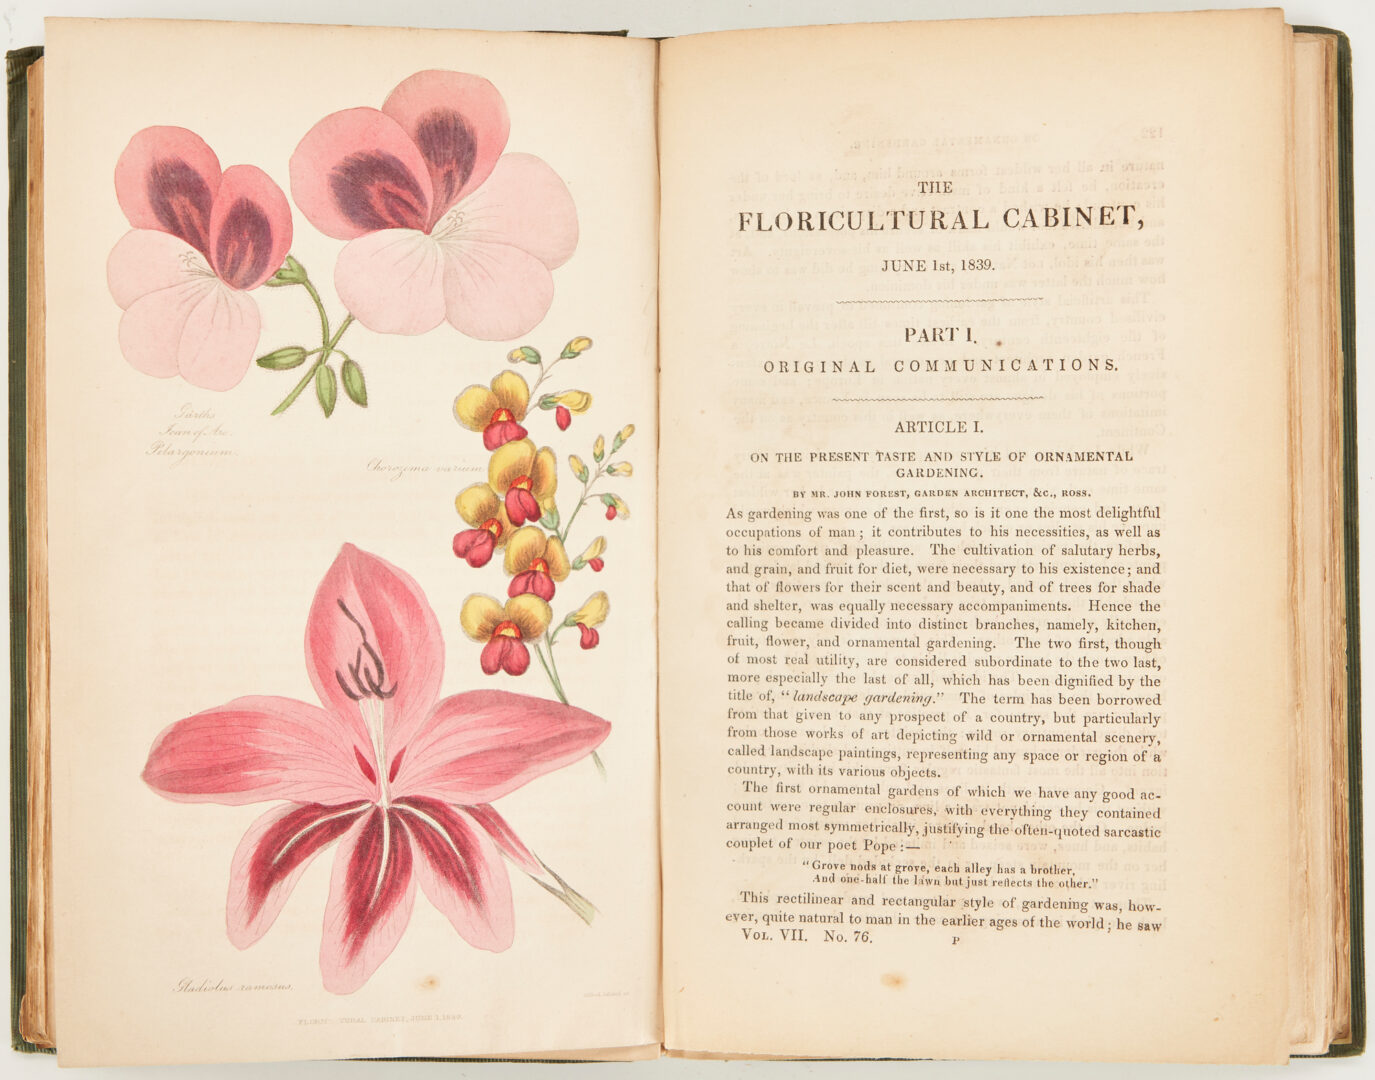 Lot 709: The Floricultural Cabinet & Florist's Magazine, 90 botanical plates in 7 Vols., ca. 1833-40